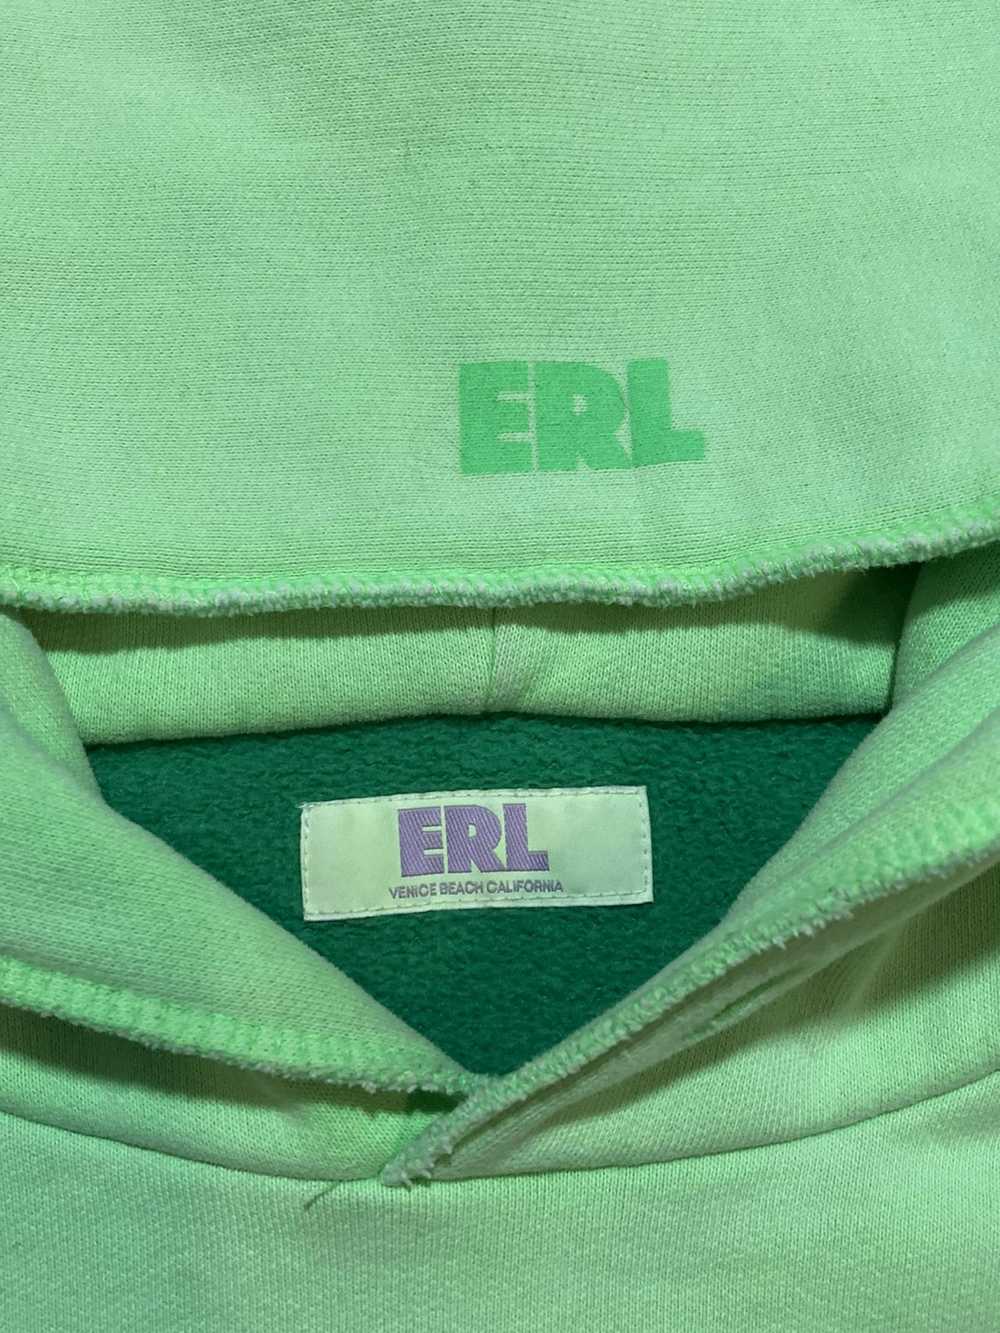 ERL Swirl Hoodie (Green/Green) - image 7